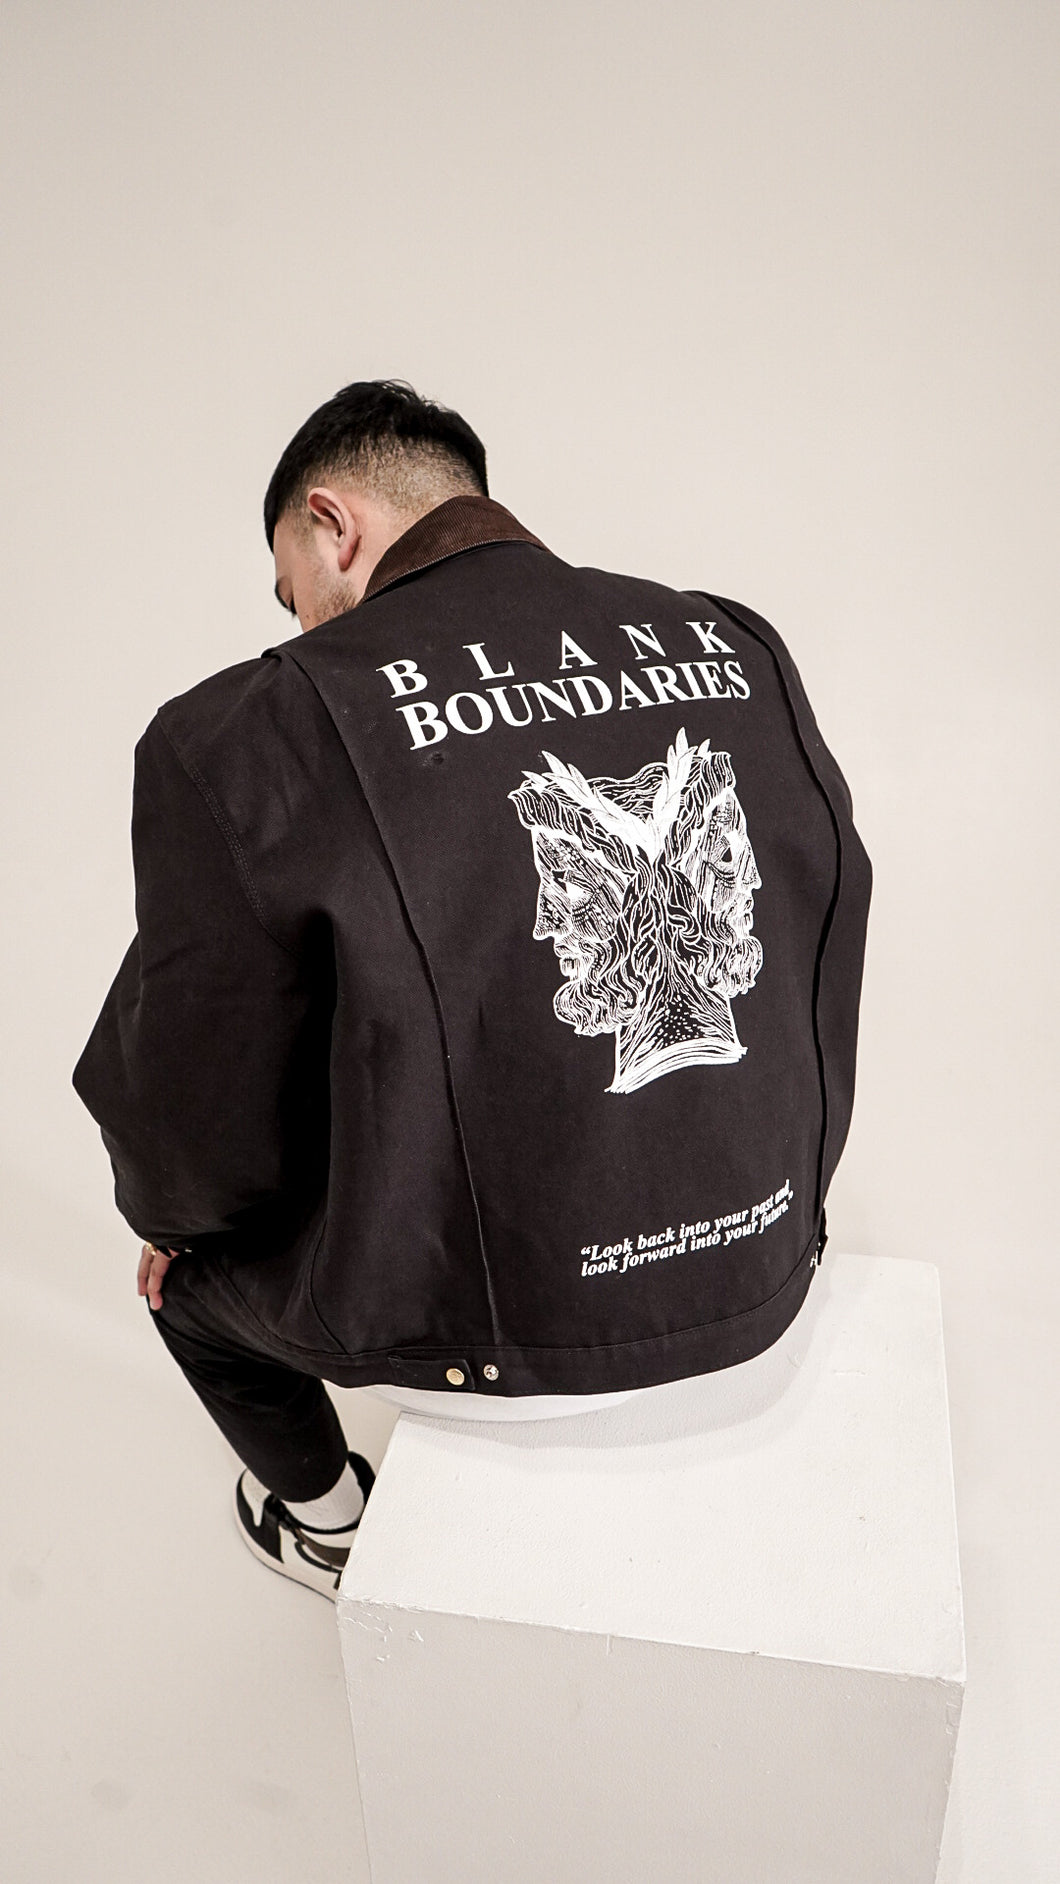 BxB Blank Boundaries Anniversary Jacket